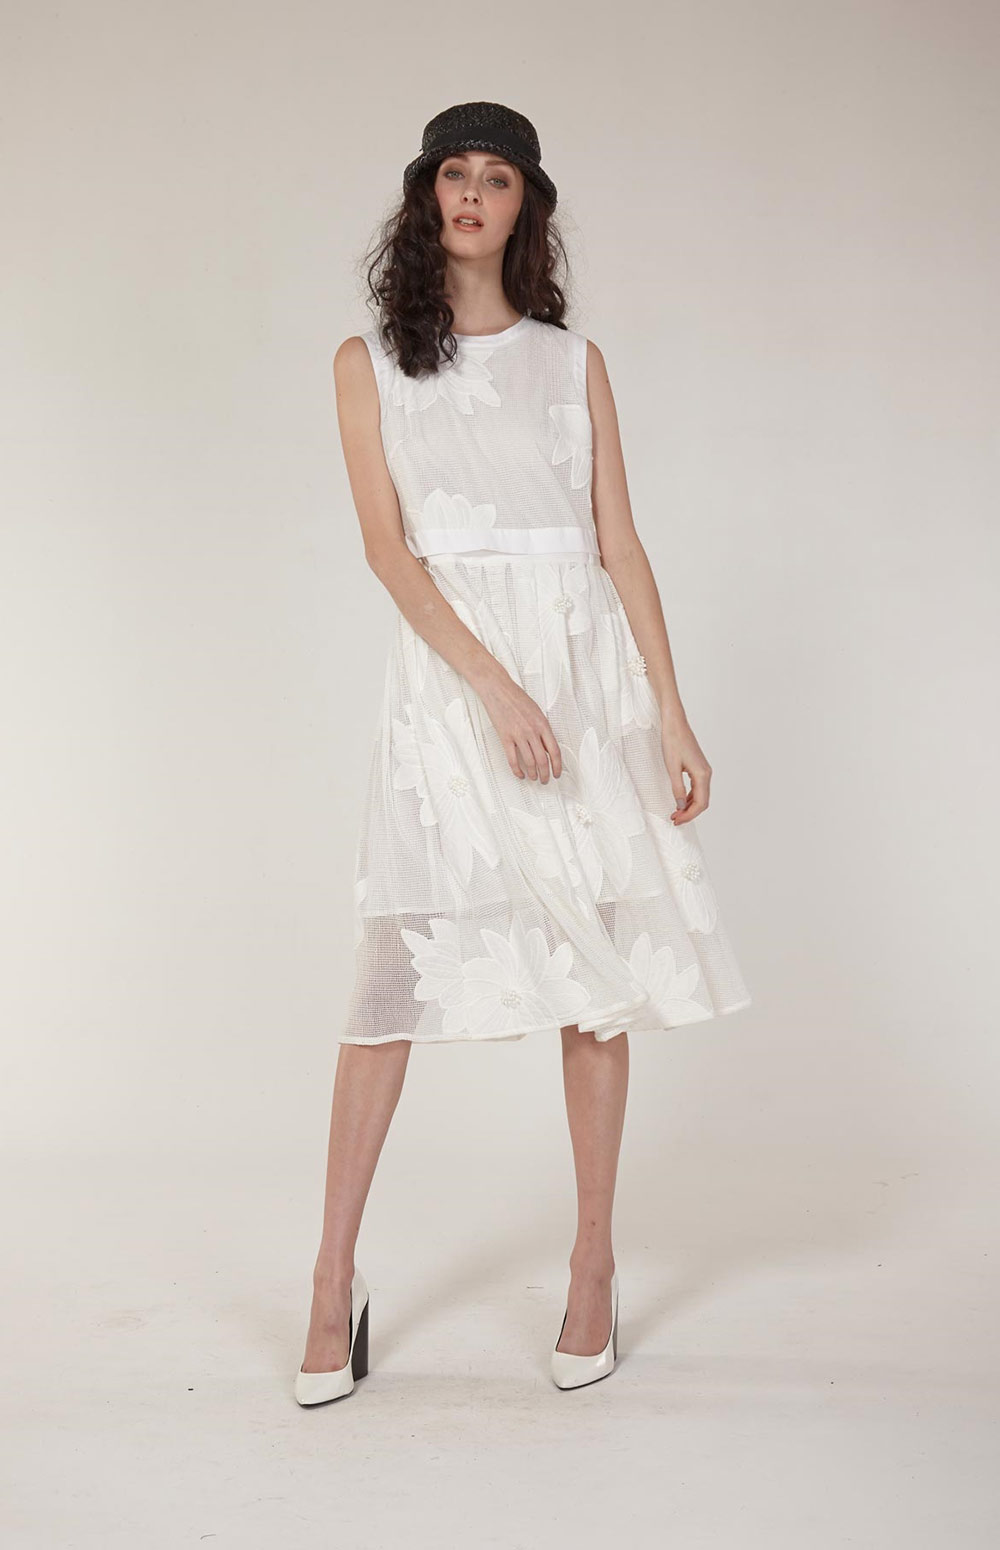 Trelise Cooper Linda Lovelace Dress, $350 (sale price)